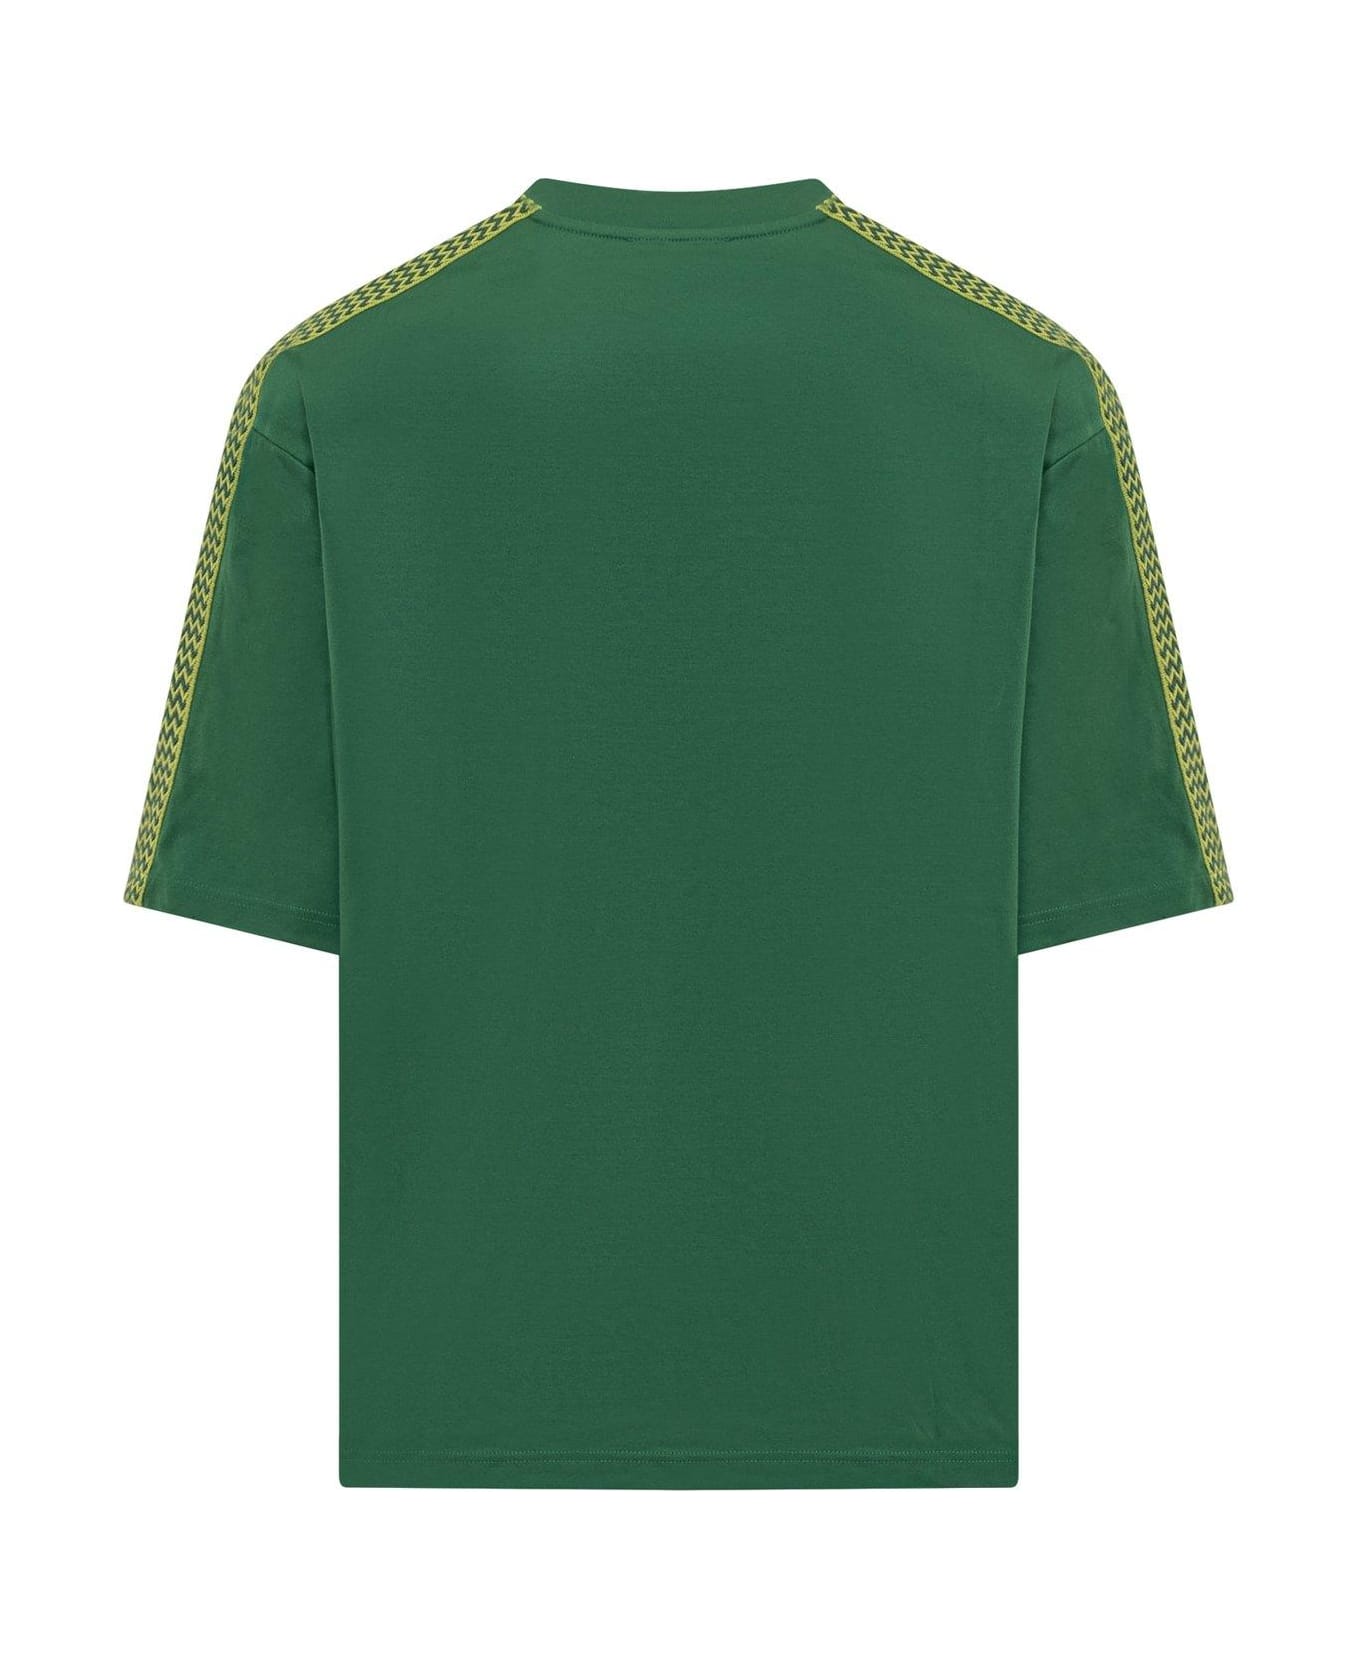 Lanvin Logo-embroidered Crewneck T-shirt - GREEN シャツ